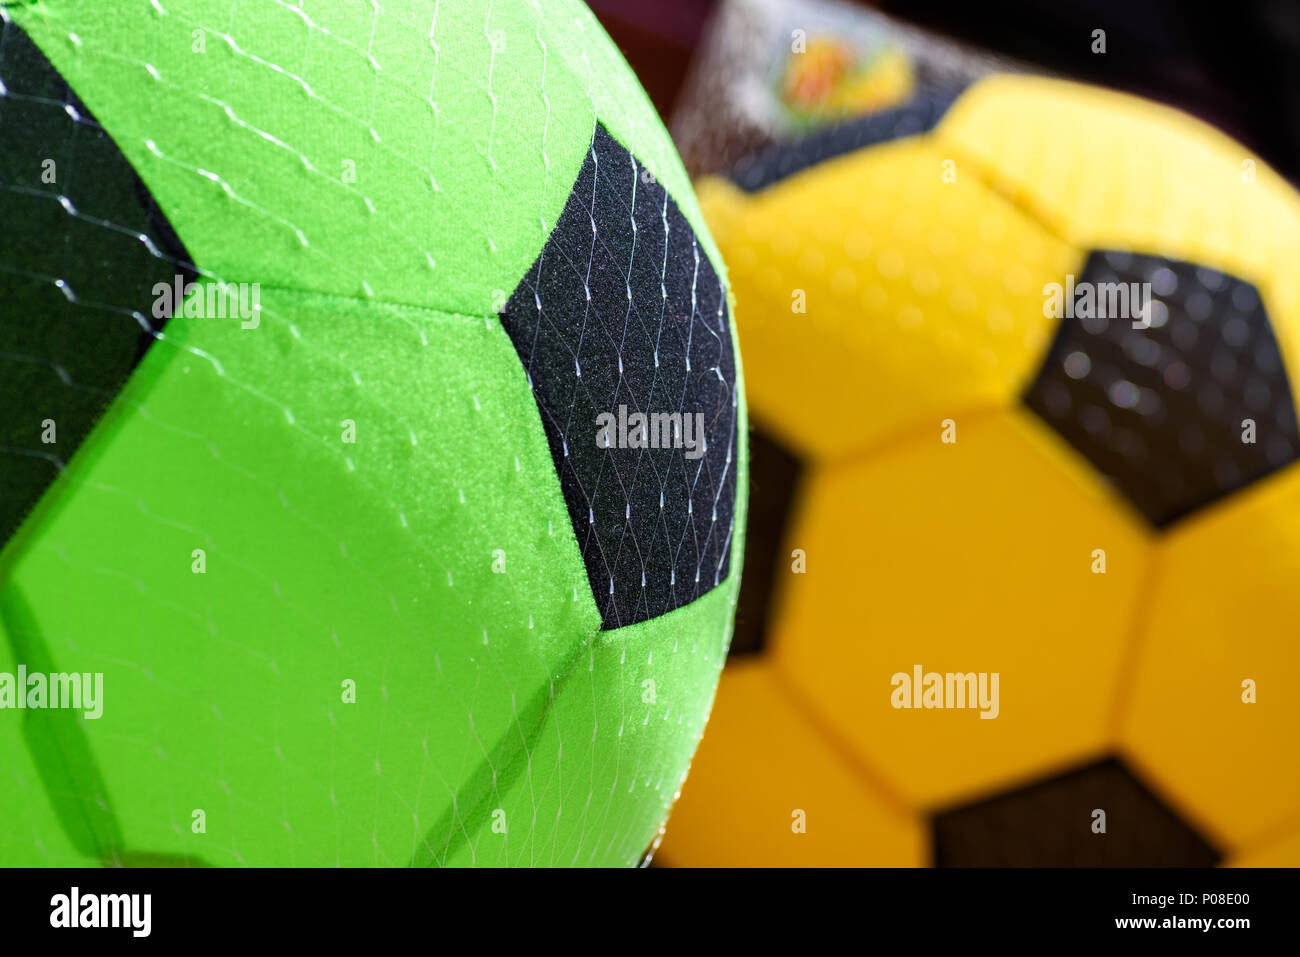 Sponge soccer footballs for sale hanging outside a shop in summer. Stock Photo